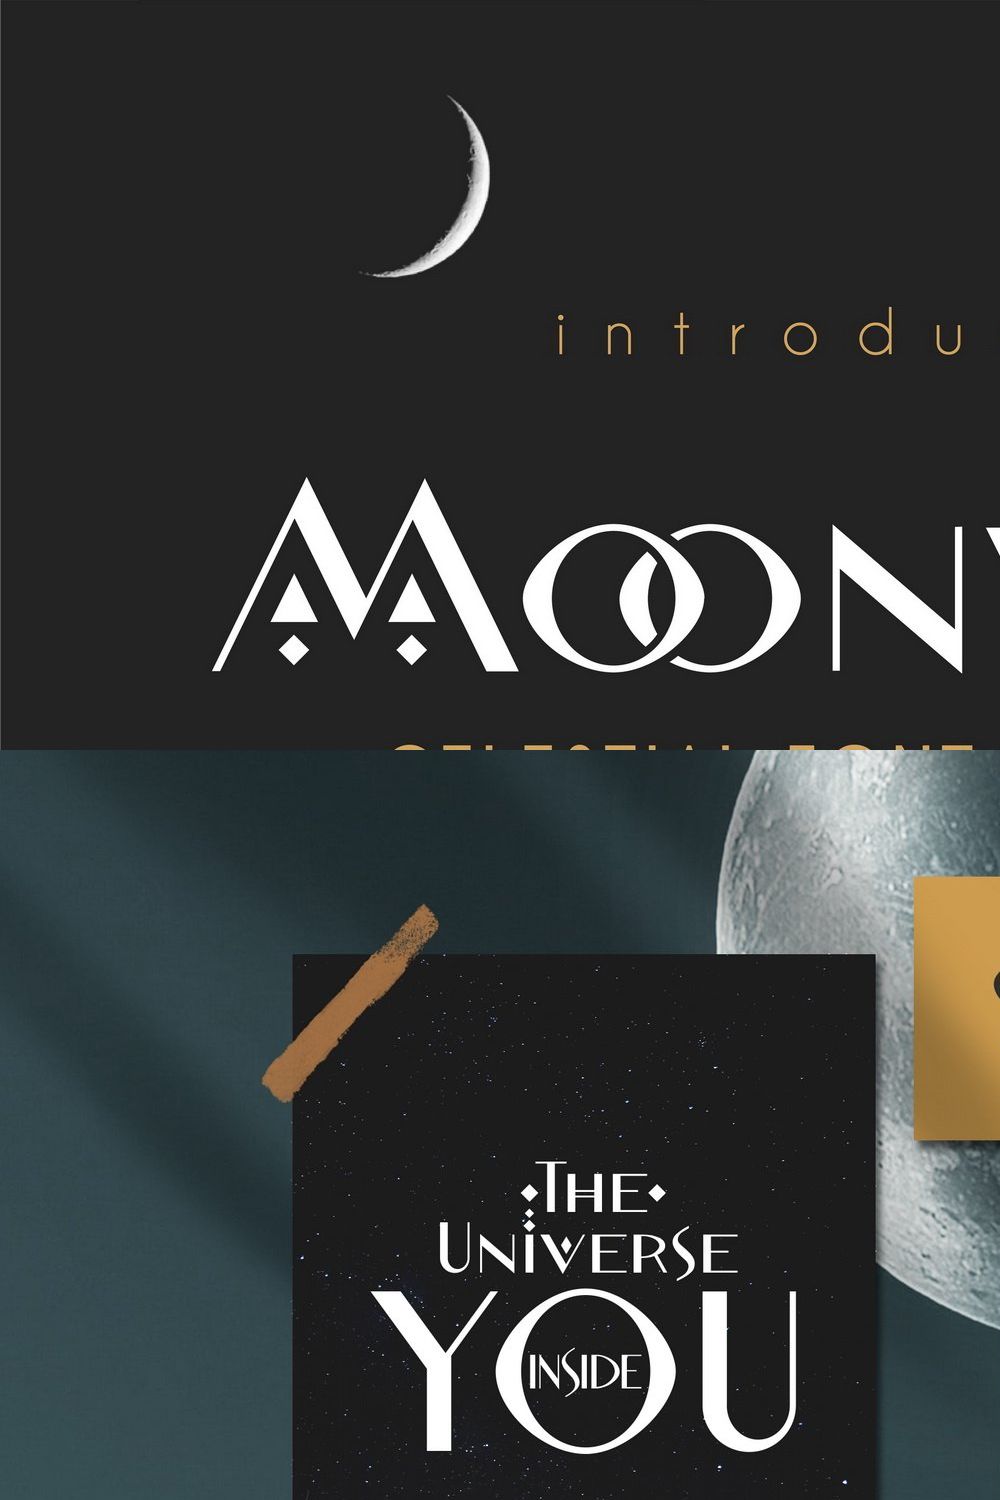 Moonwild - Celestial Font & Symbols pinterest preview image.